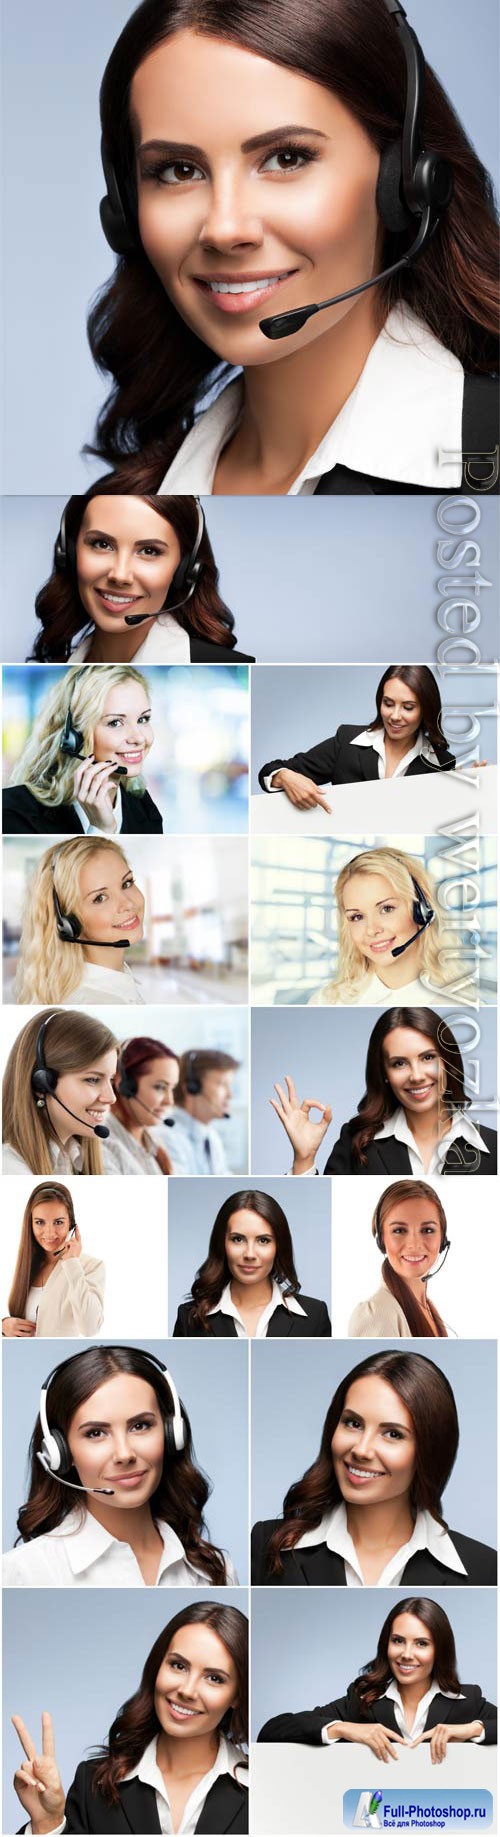 Female operators stock photo